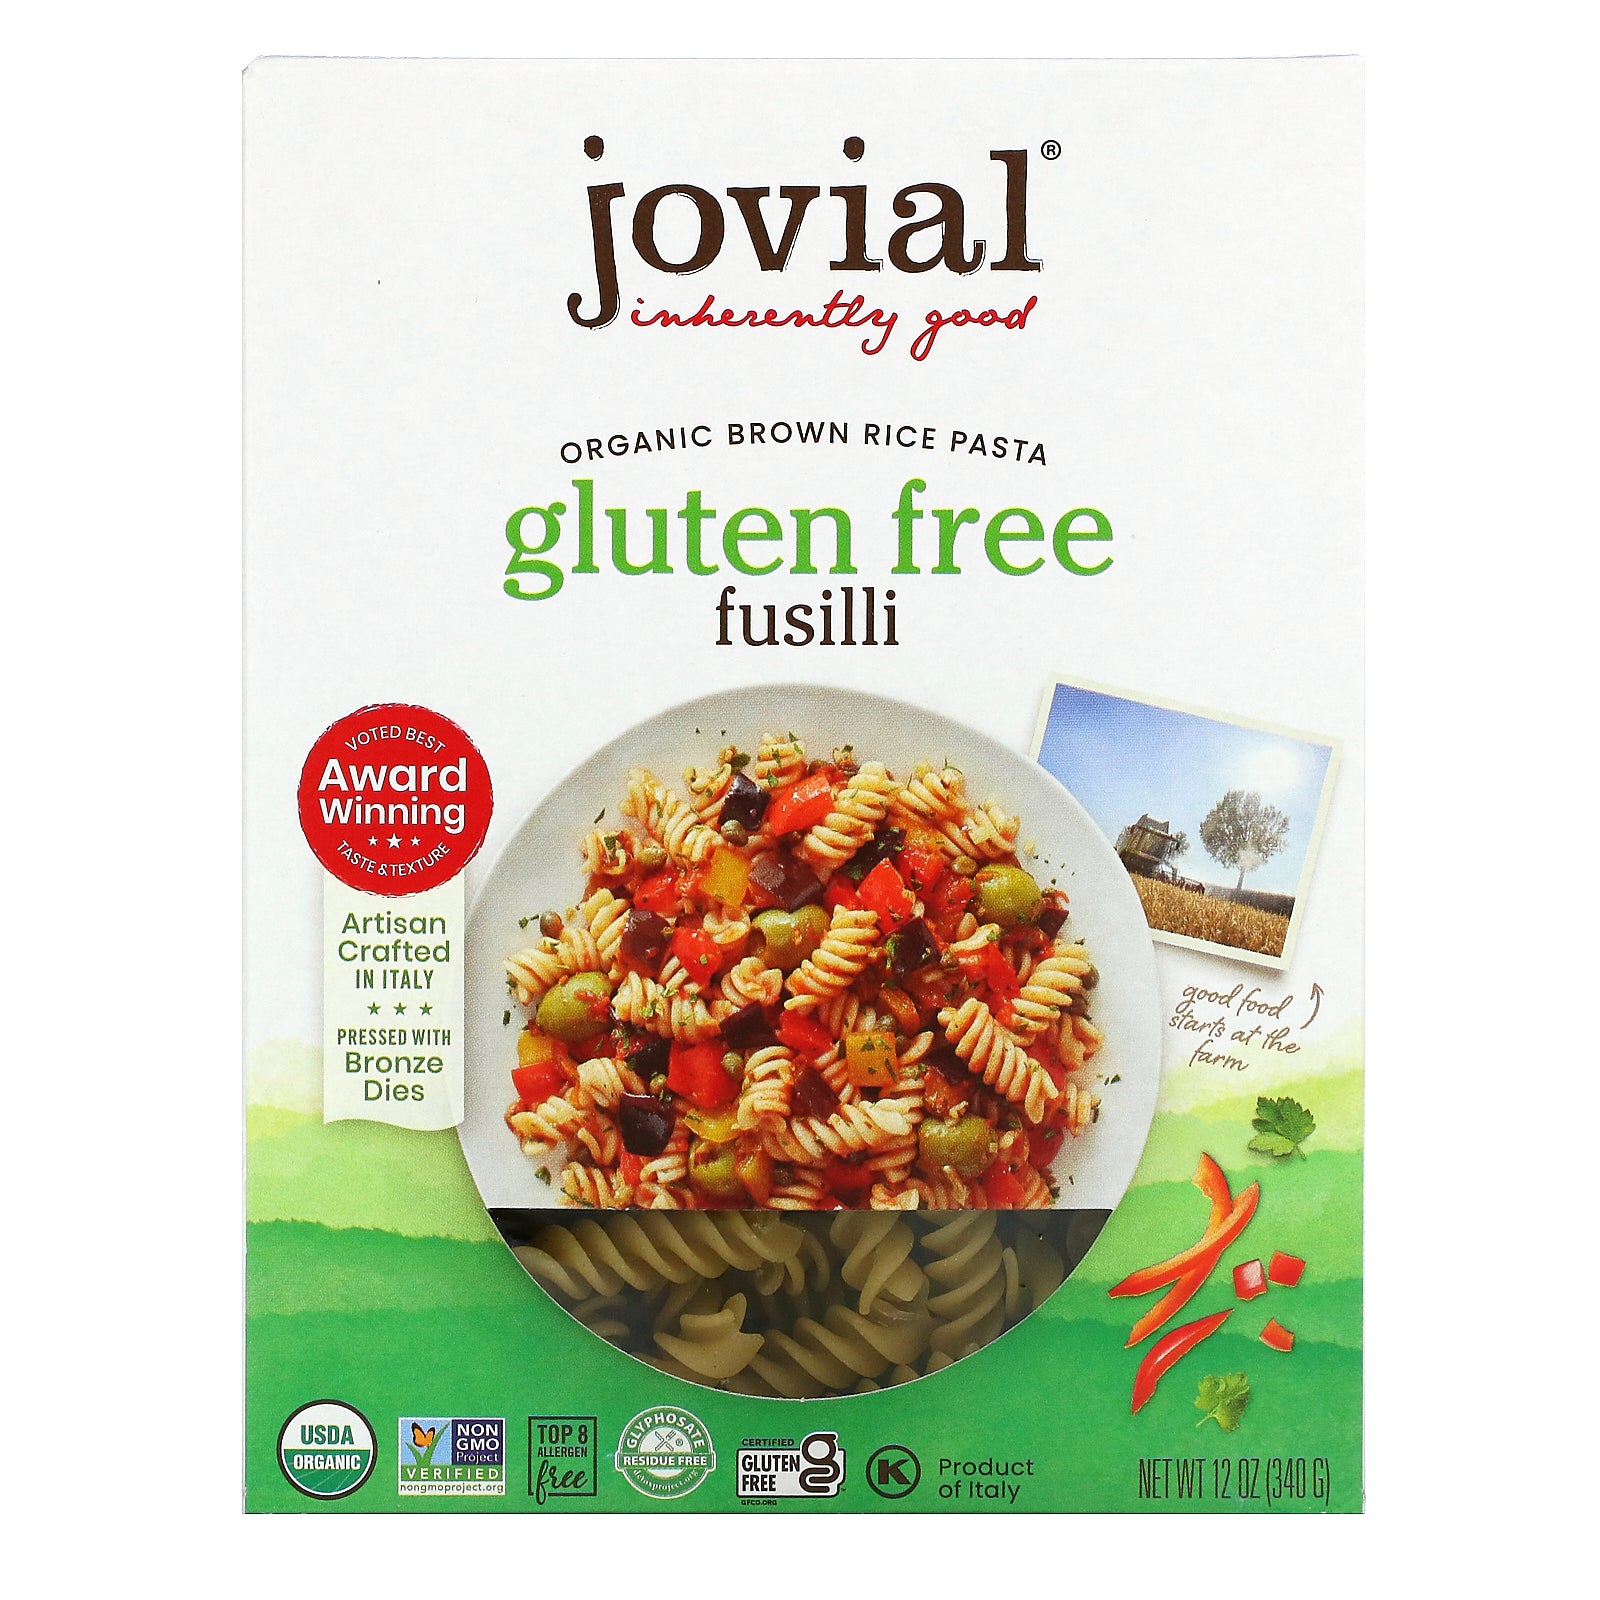 340 gram box of brown rice gluten free fusilli pasta